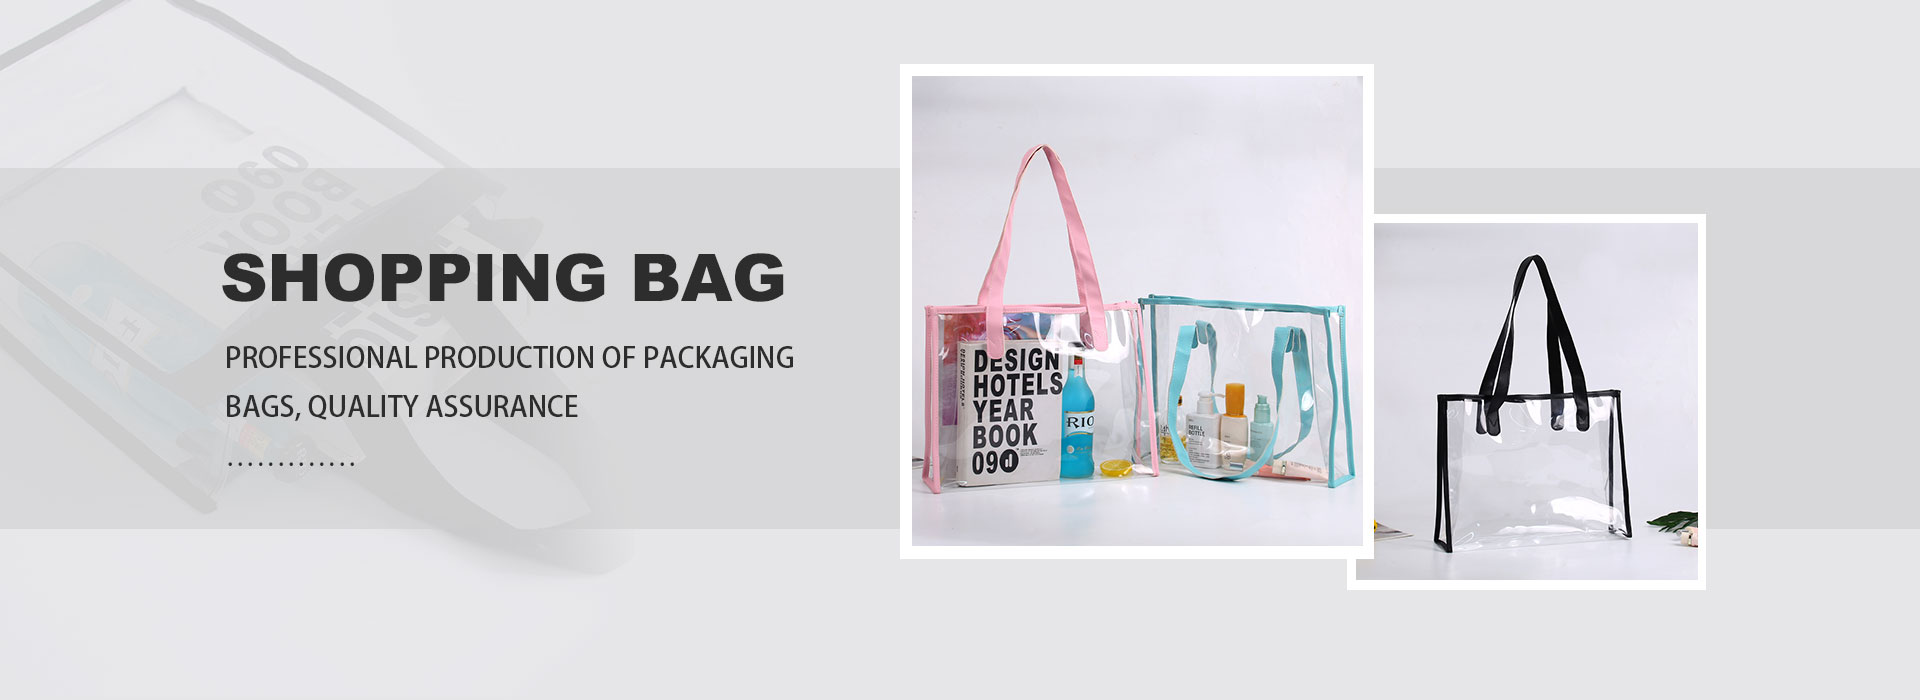 China Shopping Bag Manufacturers